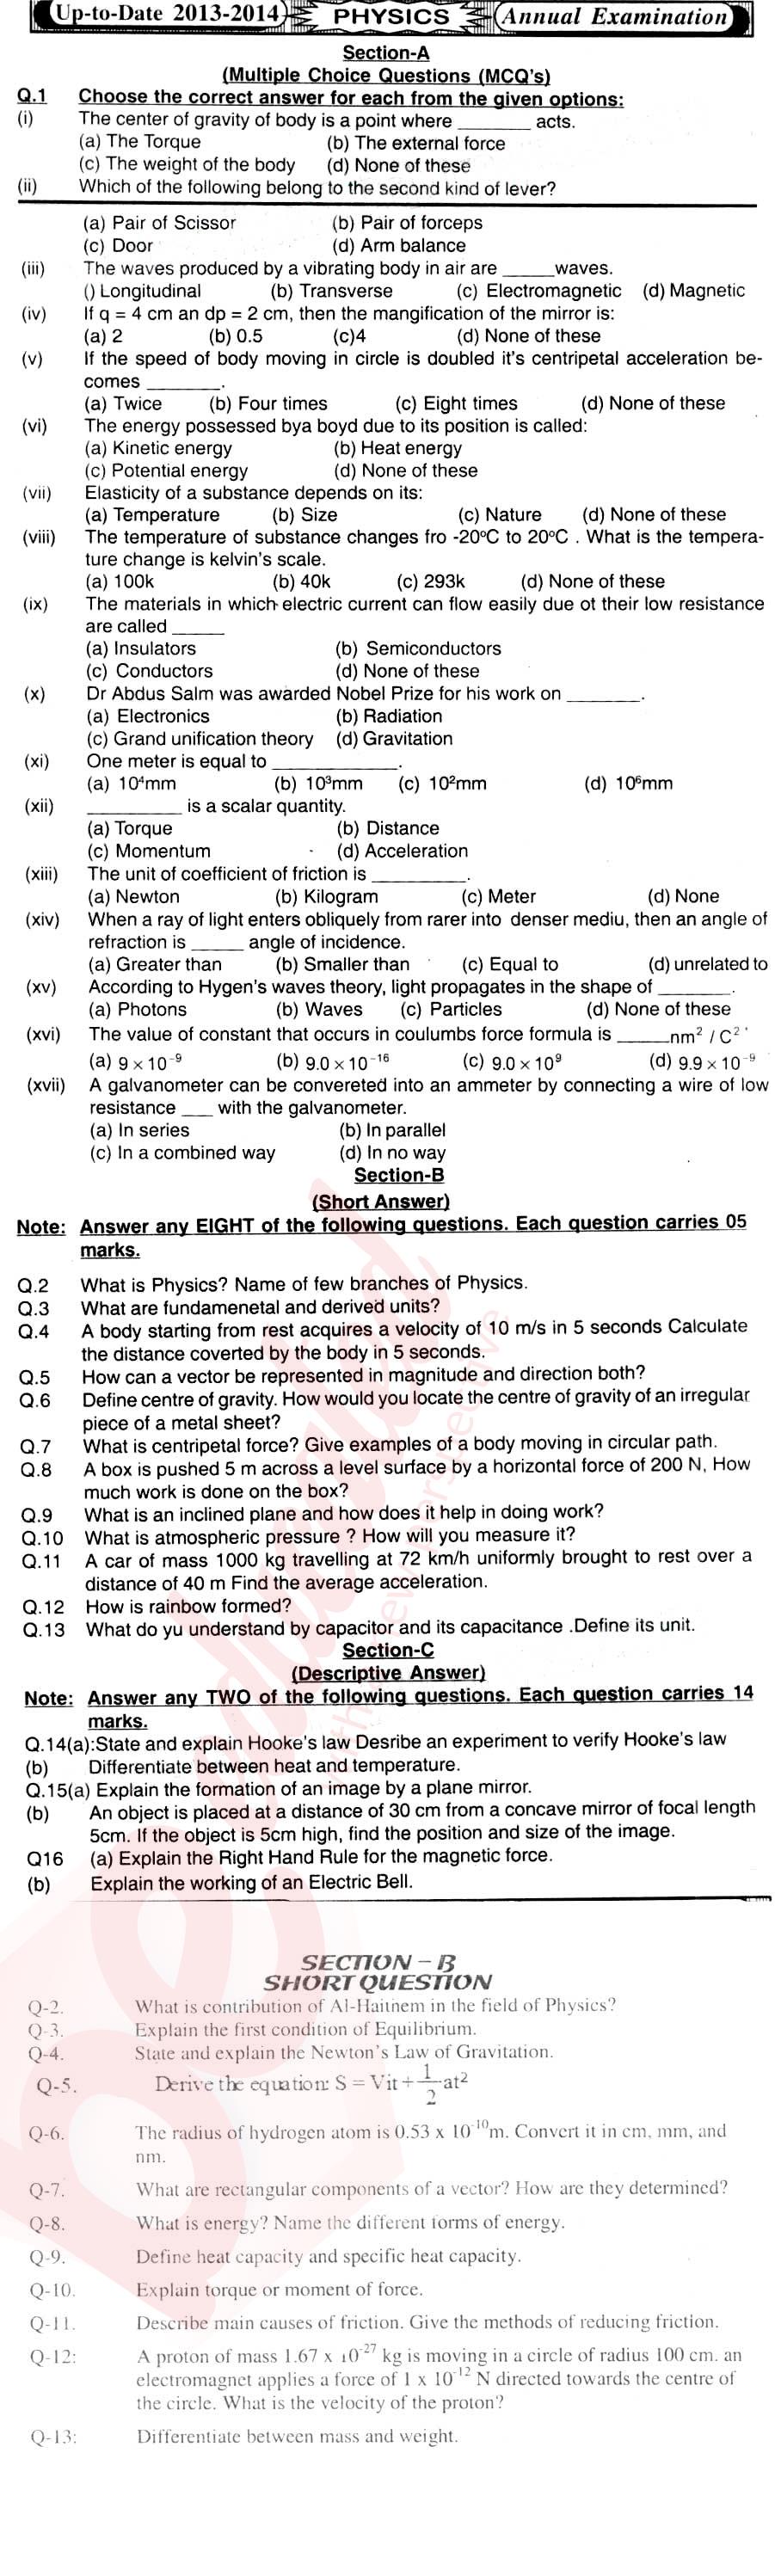 Physics 10th English Medium Past Paper Group 1 BISE Hyderabad 2014